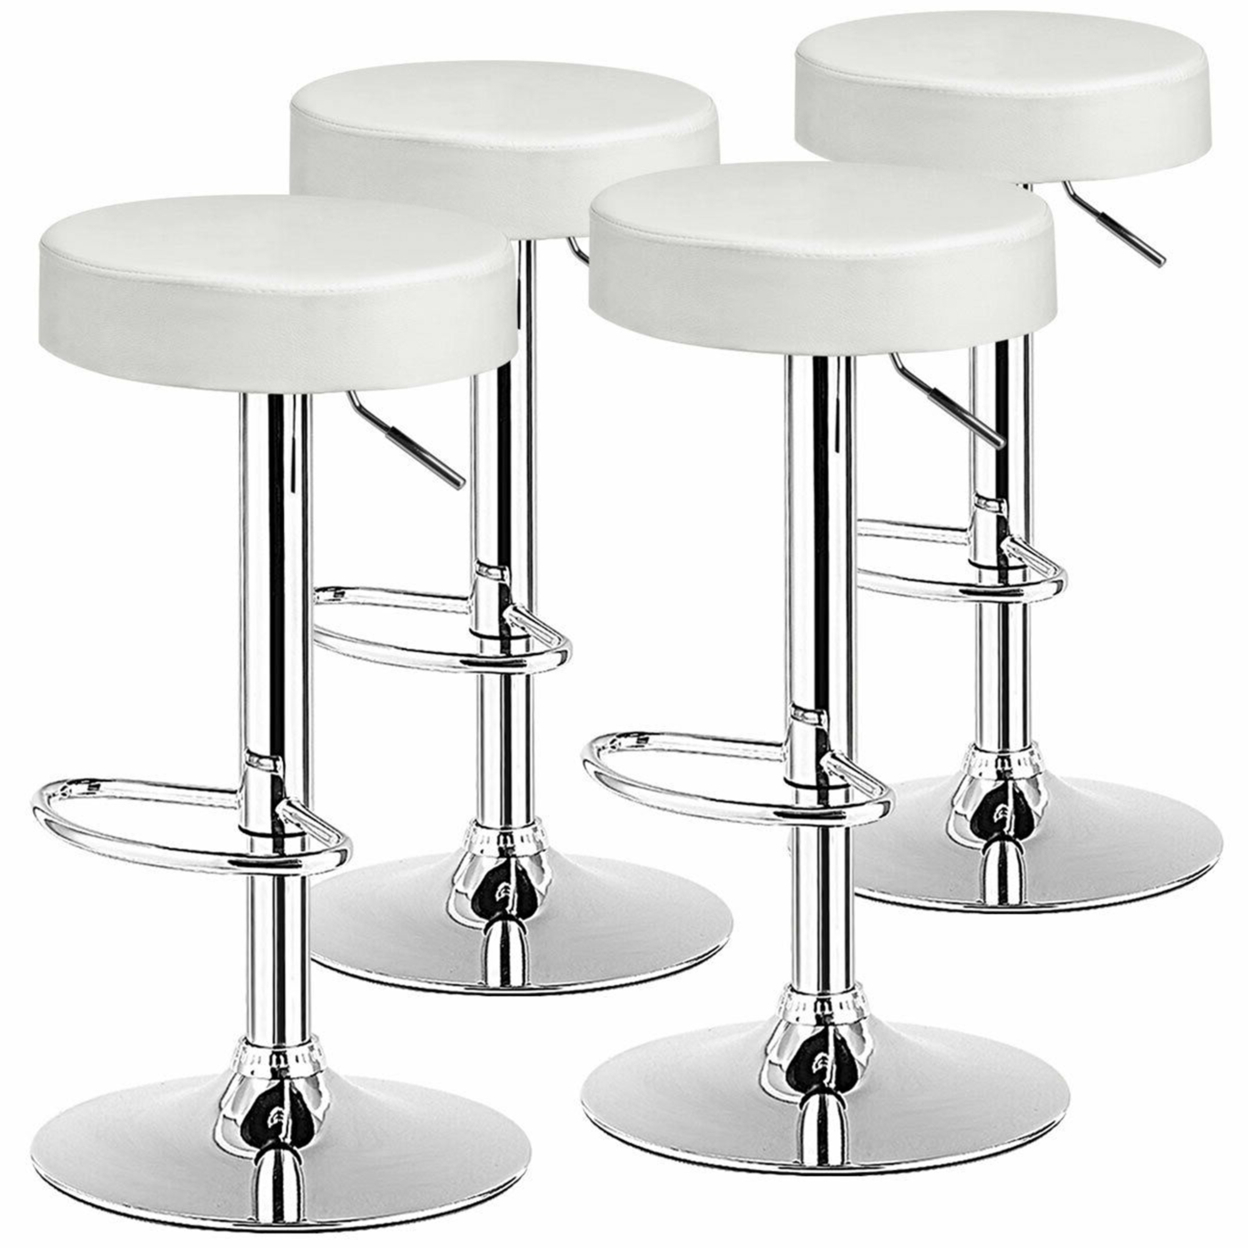 4PCS Adjustable Swivel Bar Stool PU Leather Kitchen Counter Bar Chairs White